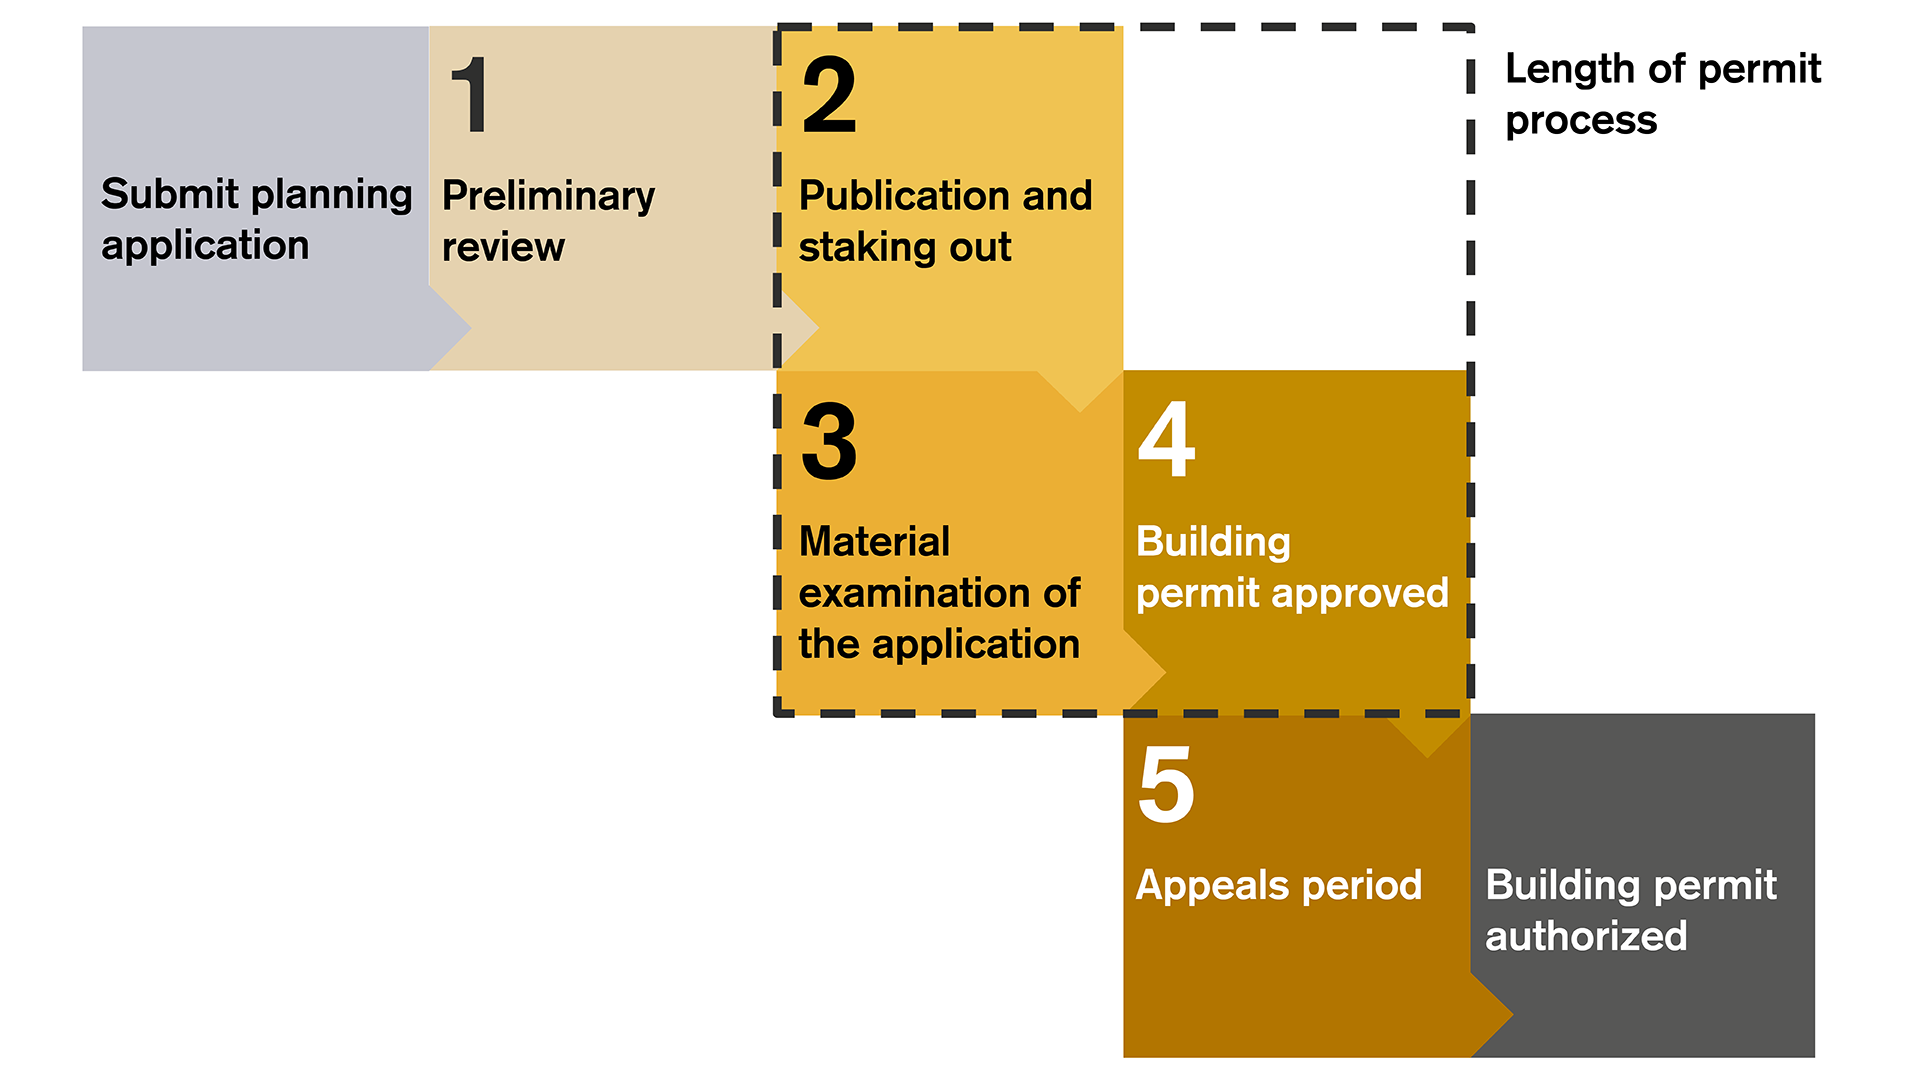 The building permit process has five steps